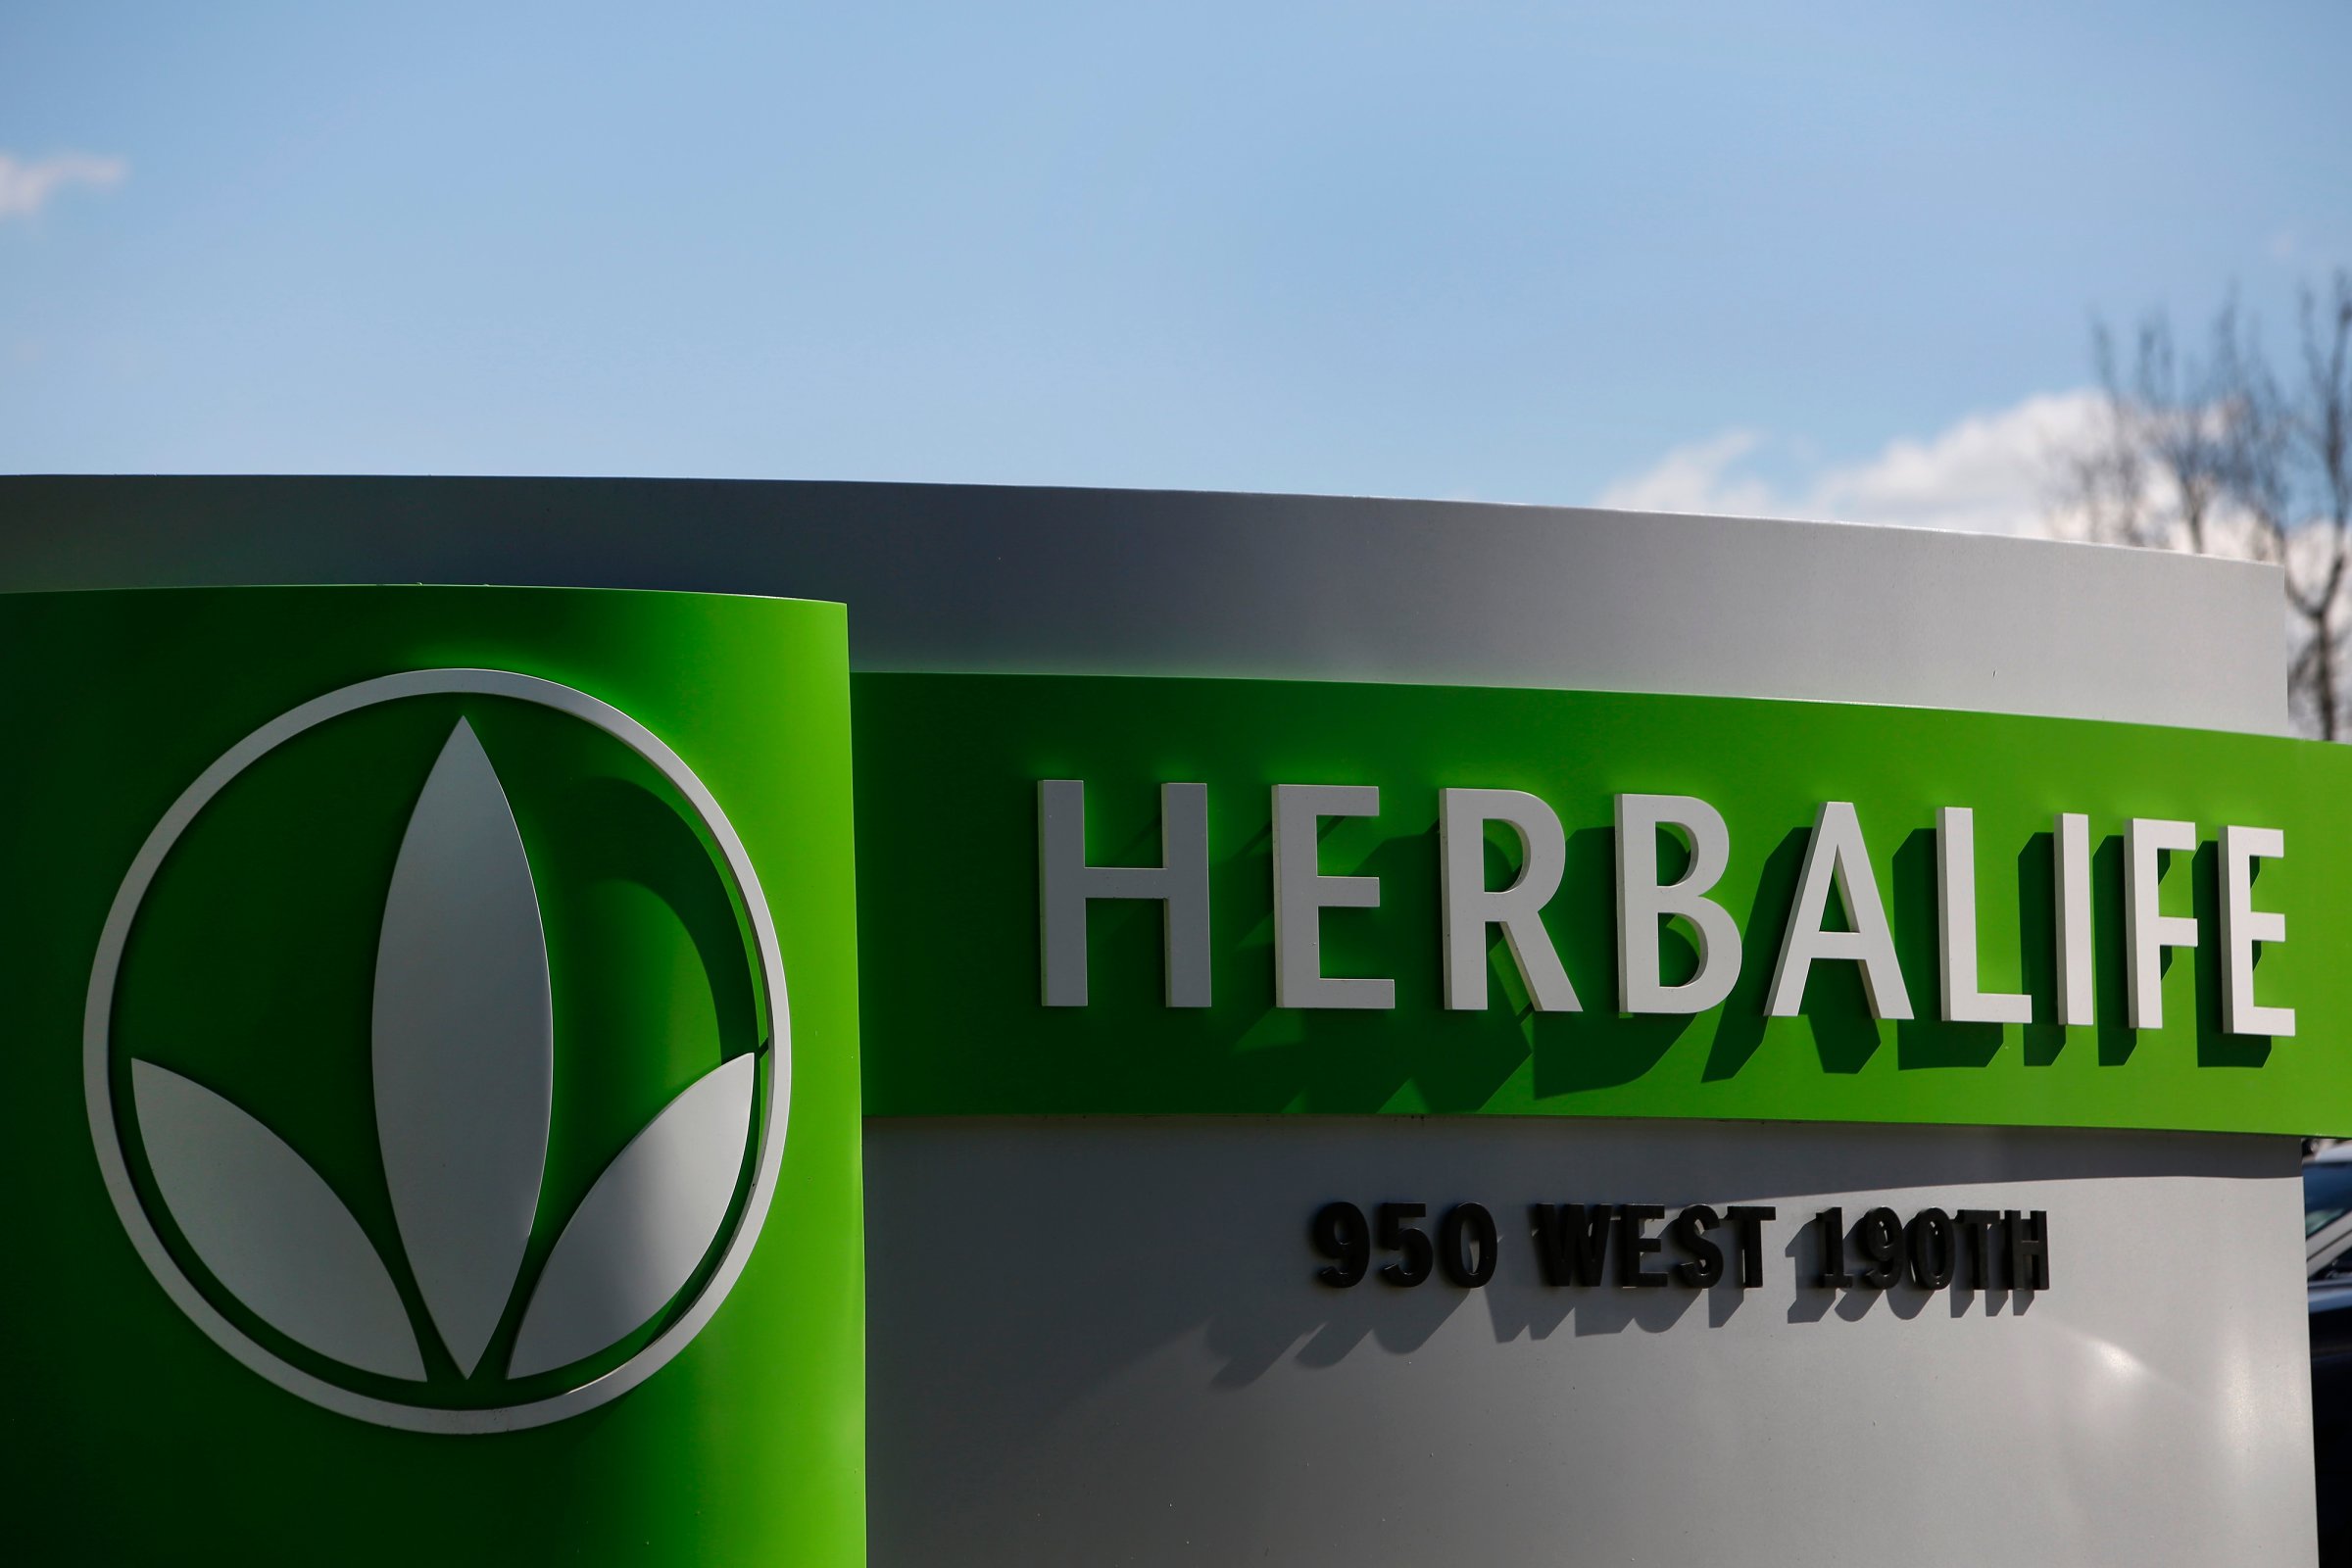 Herbalife Ltd. signage is displayed outside of Herbalife Plaza in Torrance, Calif. on Feb. 3, 2014.